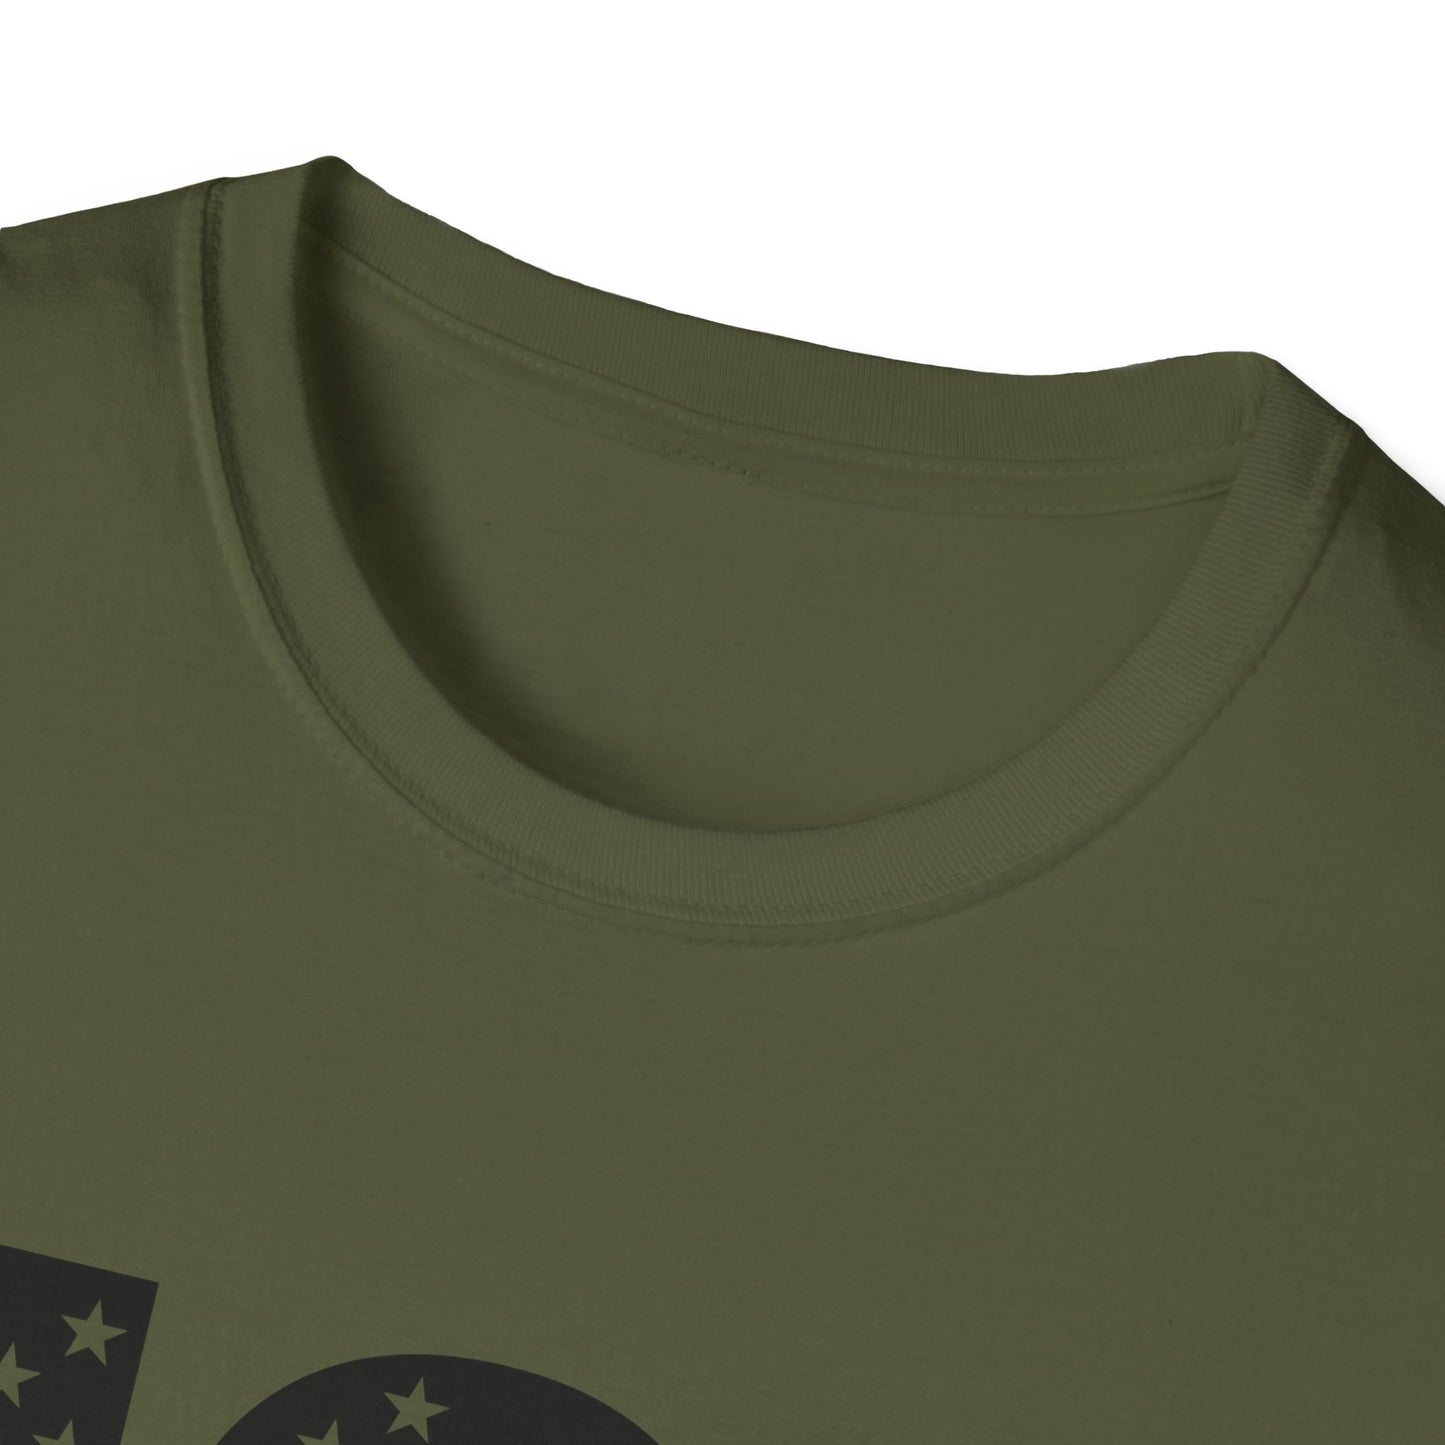 USA American Flag Black - Unisex Softstyle T-Shirt